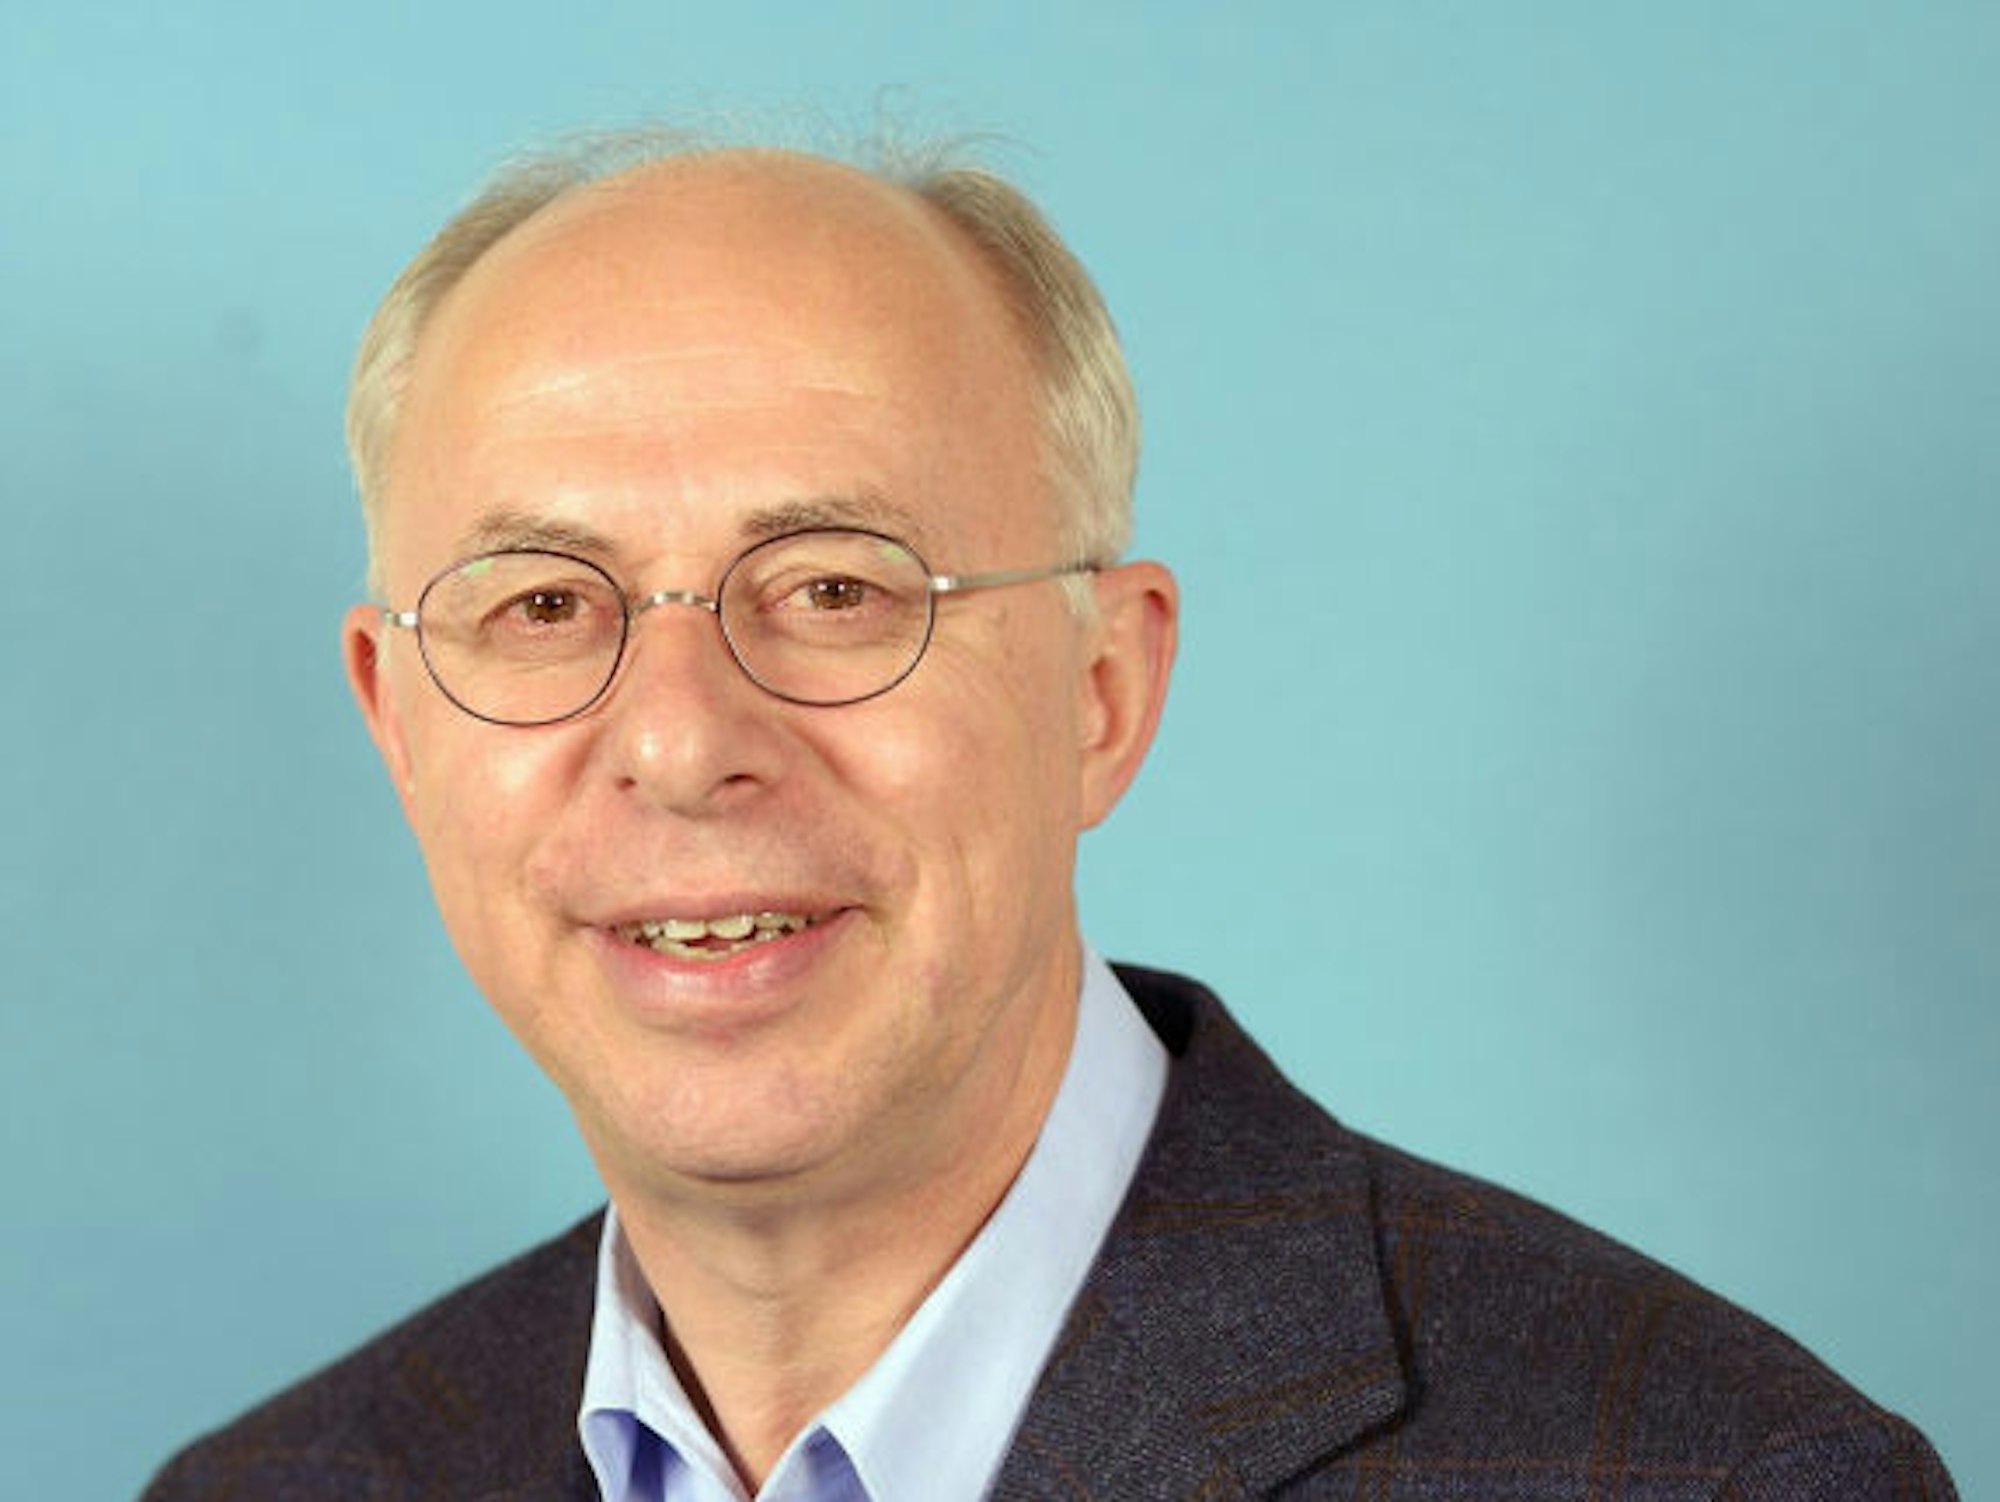 Jörg Detjen führt seit 2005 die Fraktion der Linken im Stadtrat.